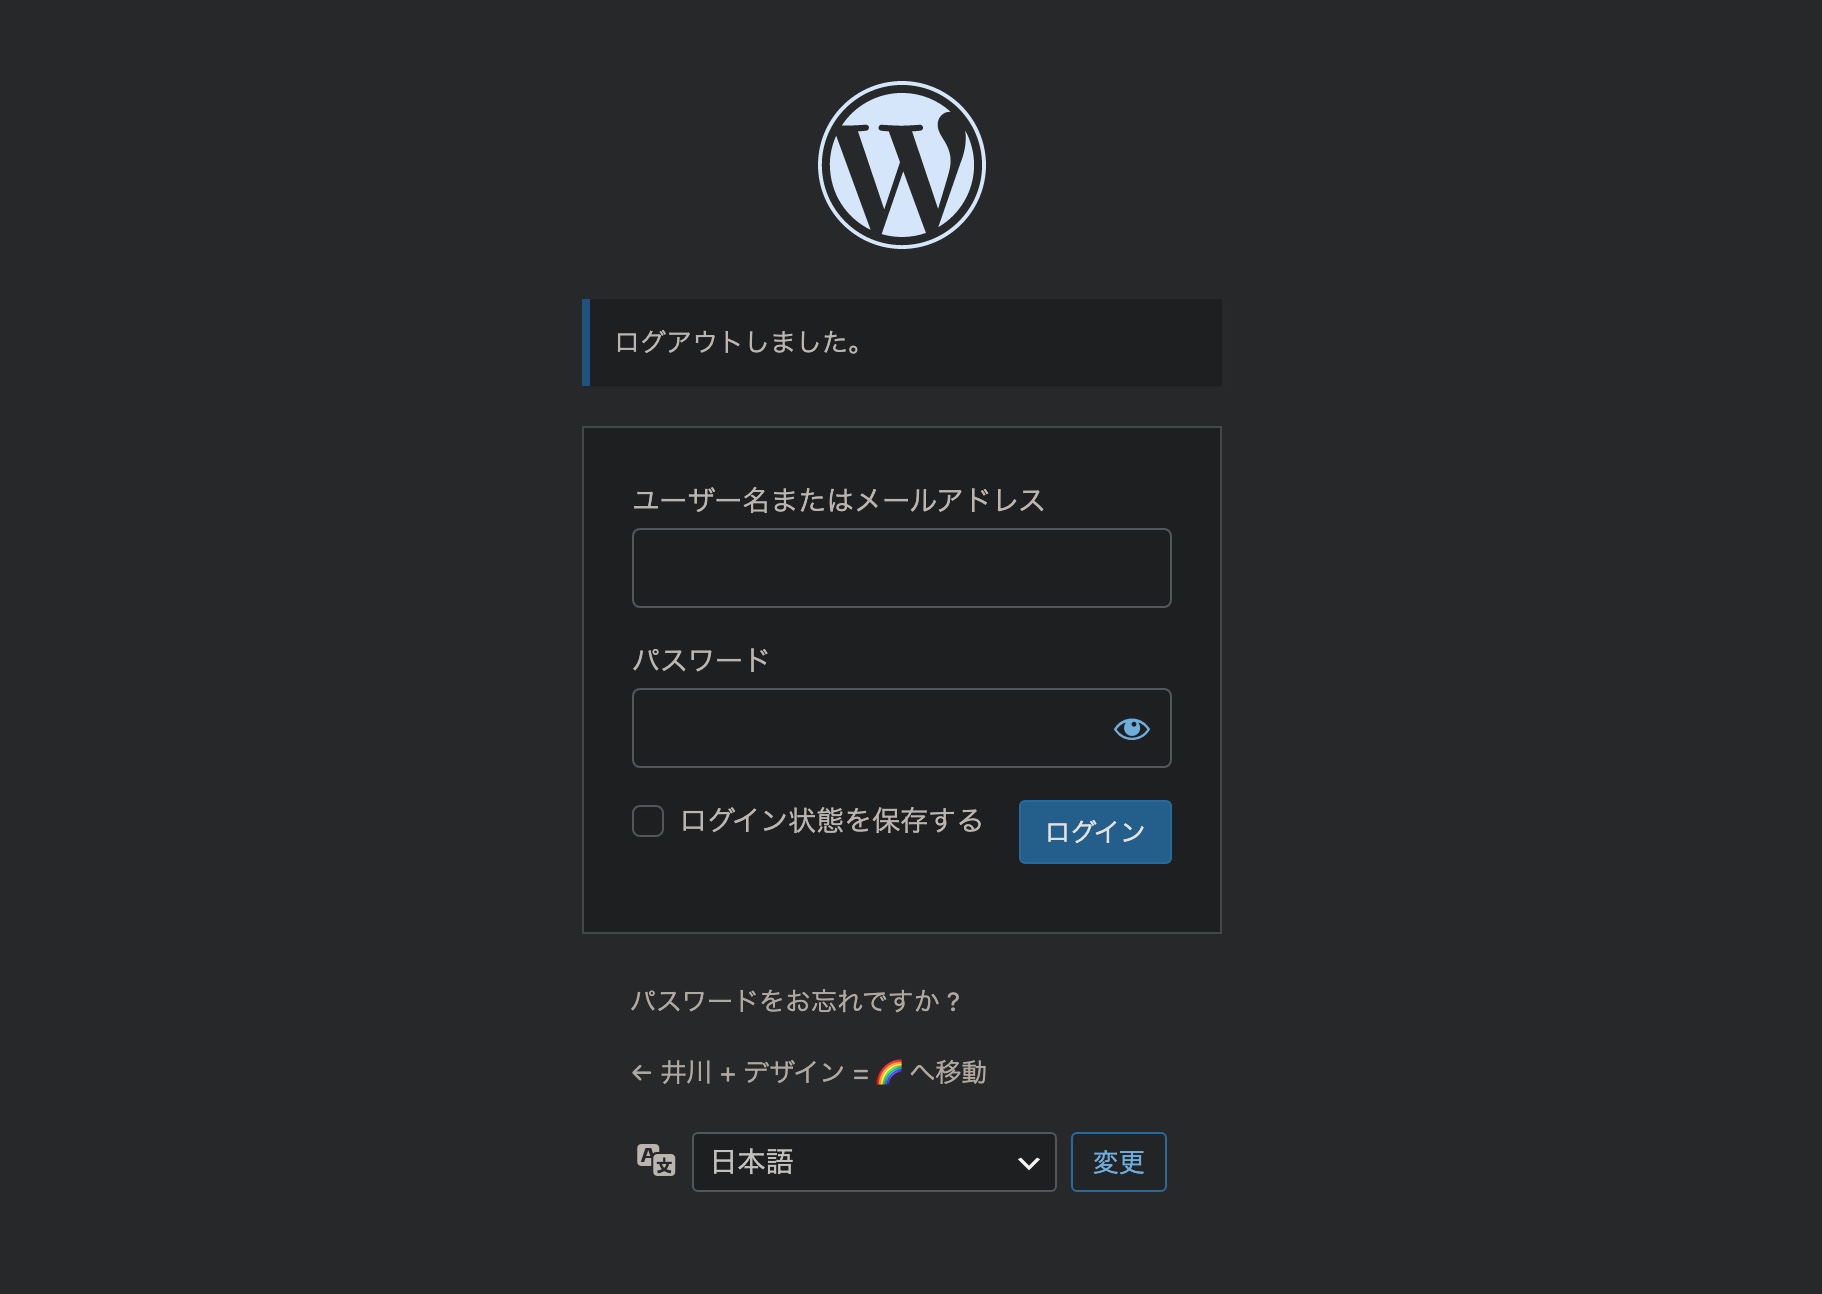 WordPressの管理画面へログインする。